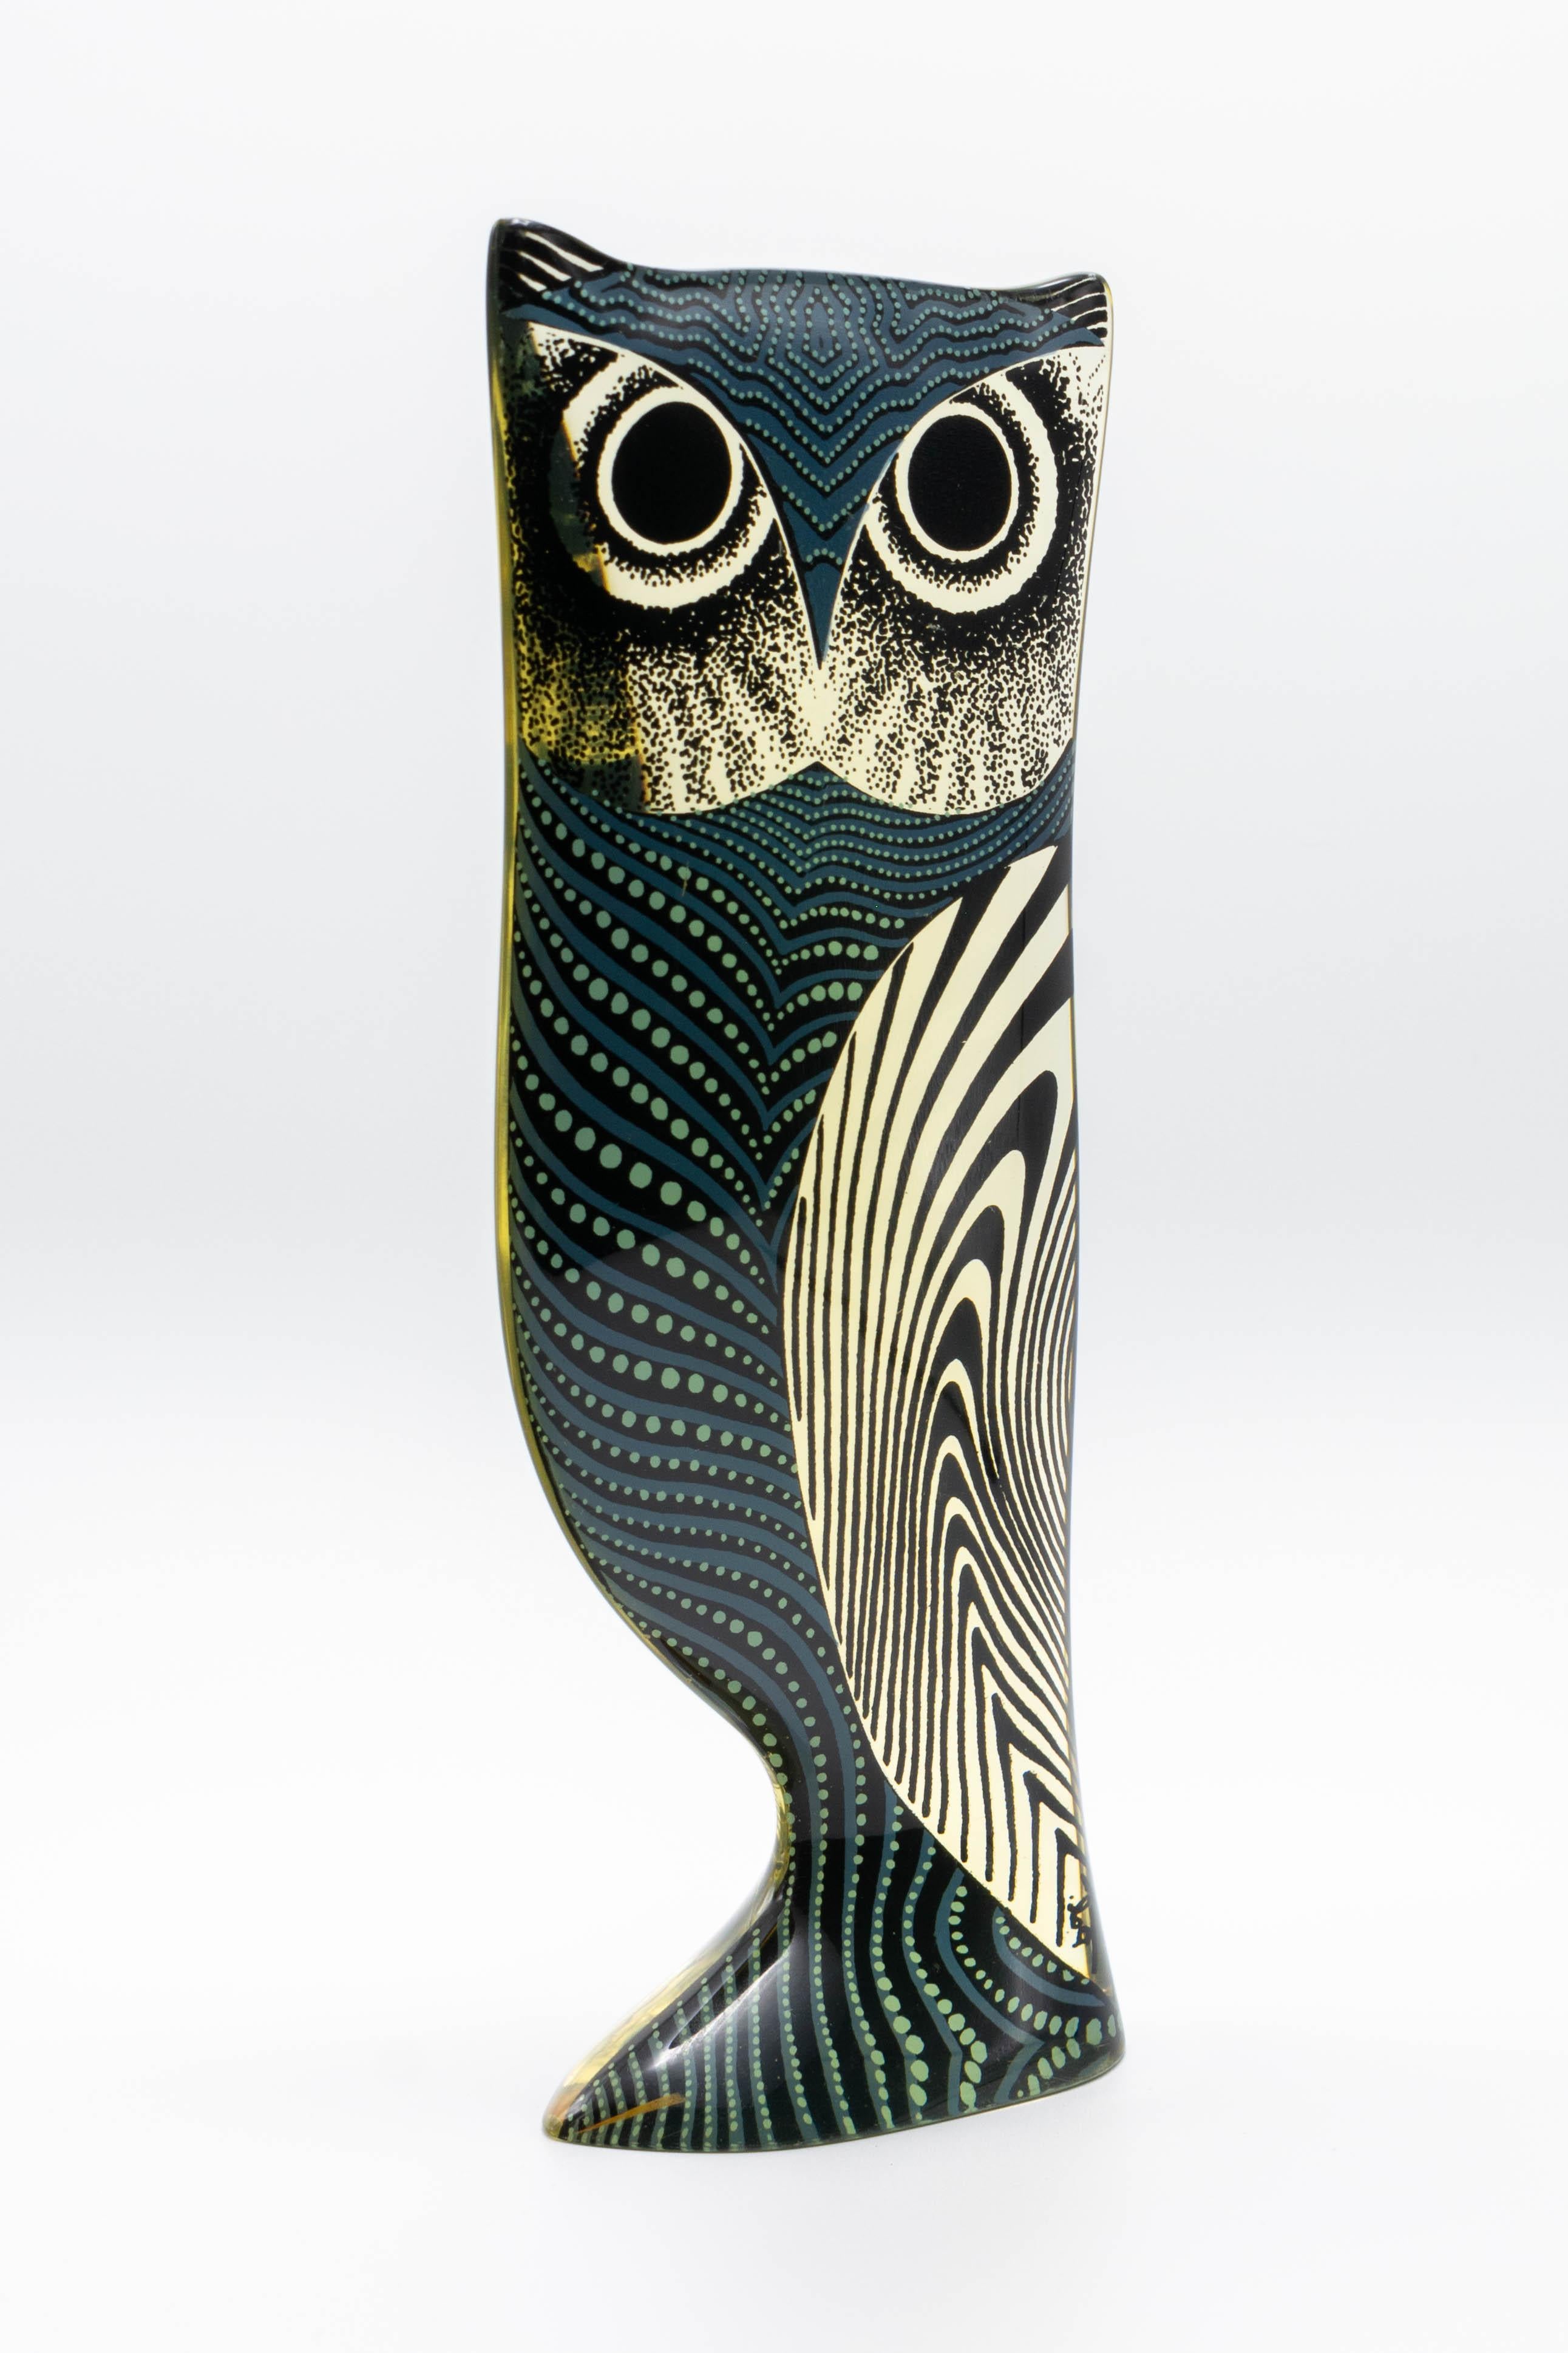 Brazilian Palatnik Op Art Lucite Owl